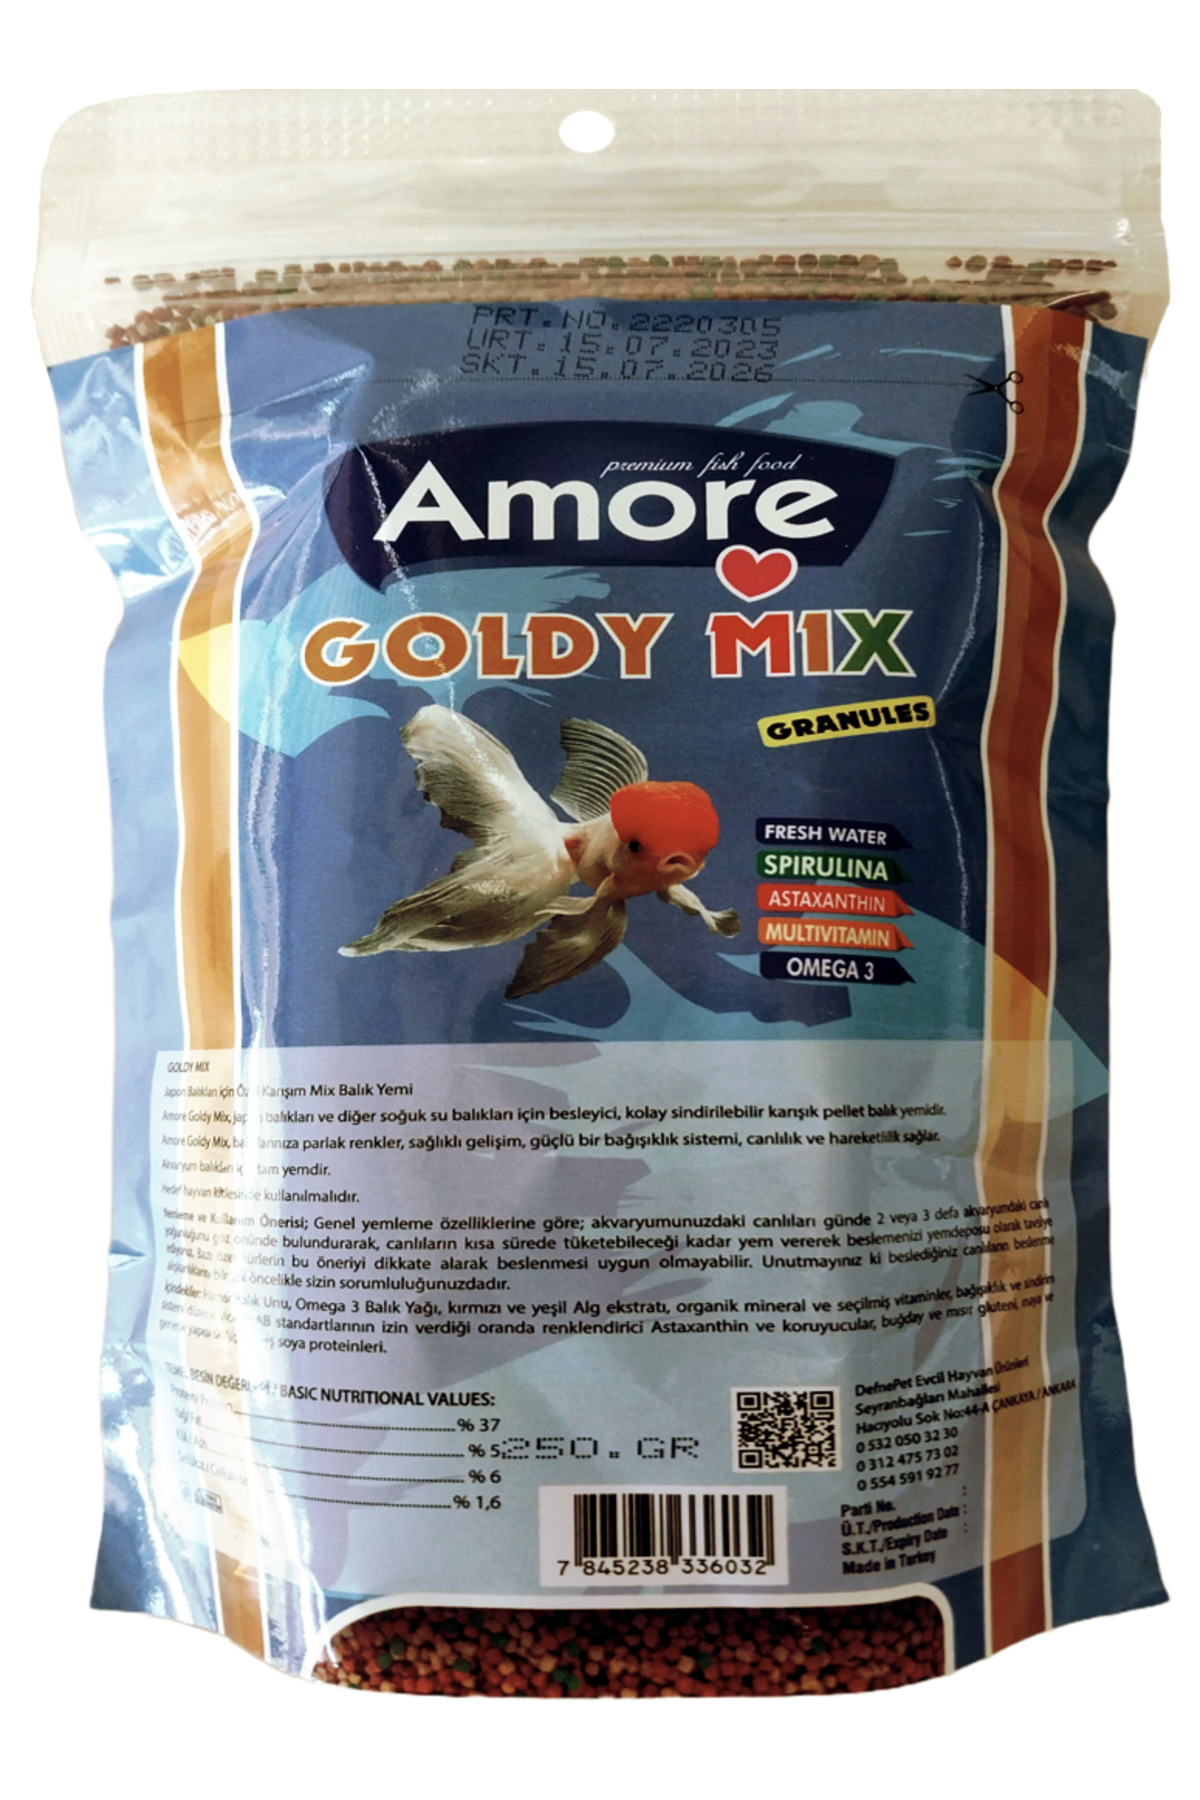 Amore Goldy Mix %37 Protein 250 gr Kajero Japon ve 1 kg AHM Green Pond Sticks Poset Balik Yemi